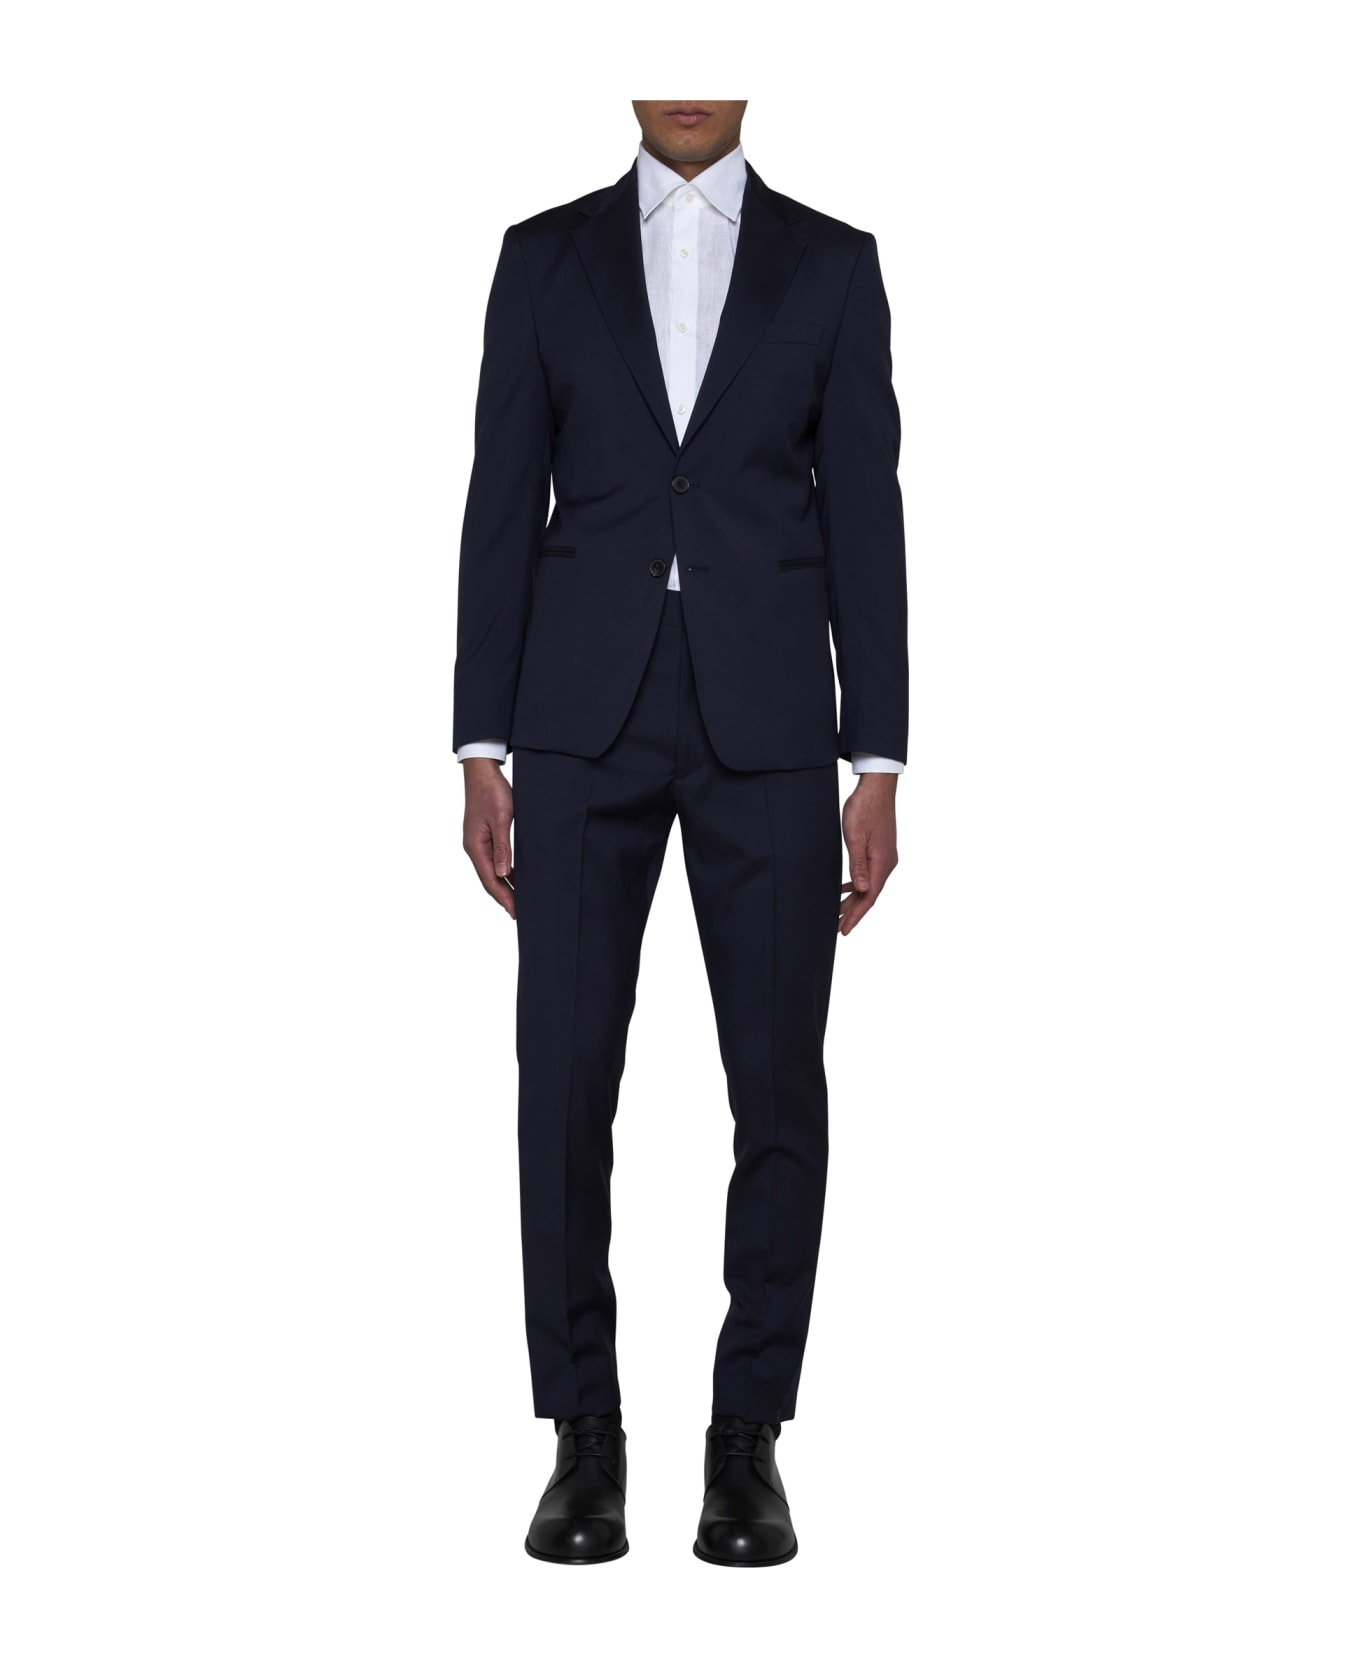 Low Brand Suit - Peacoat